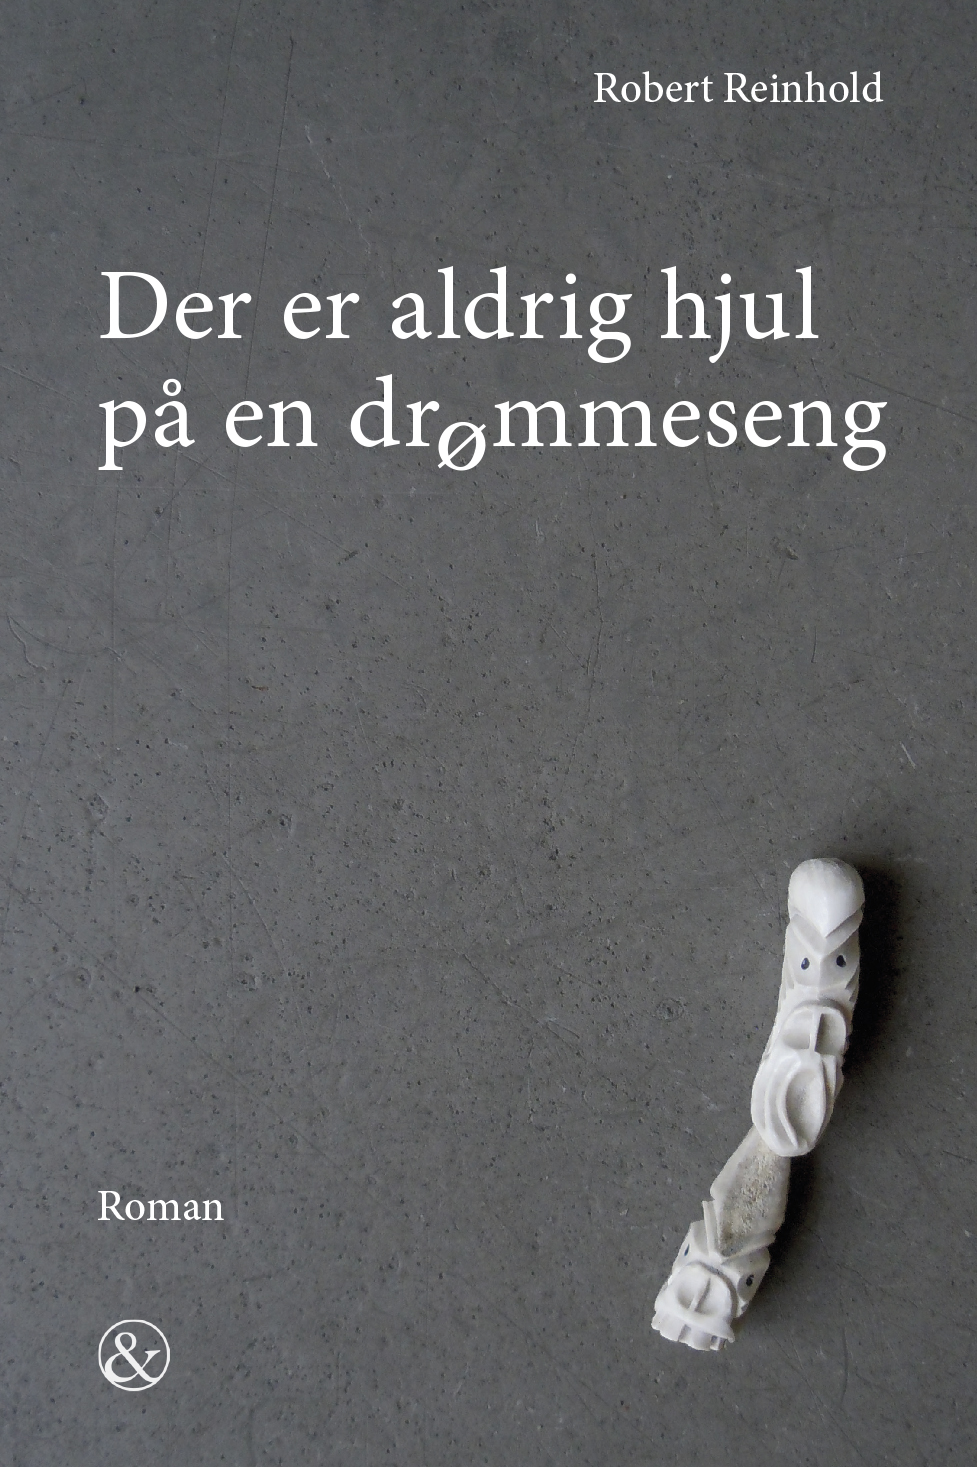 Novel by Robert Reinhold published by Jensen & Dalgaards Forlag 2014